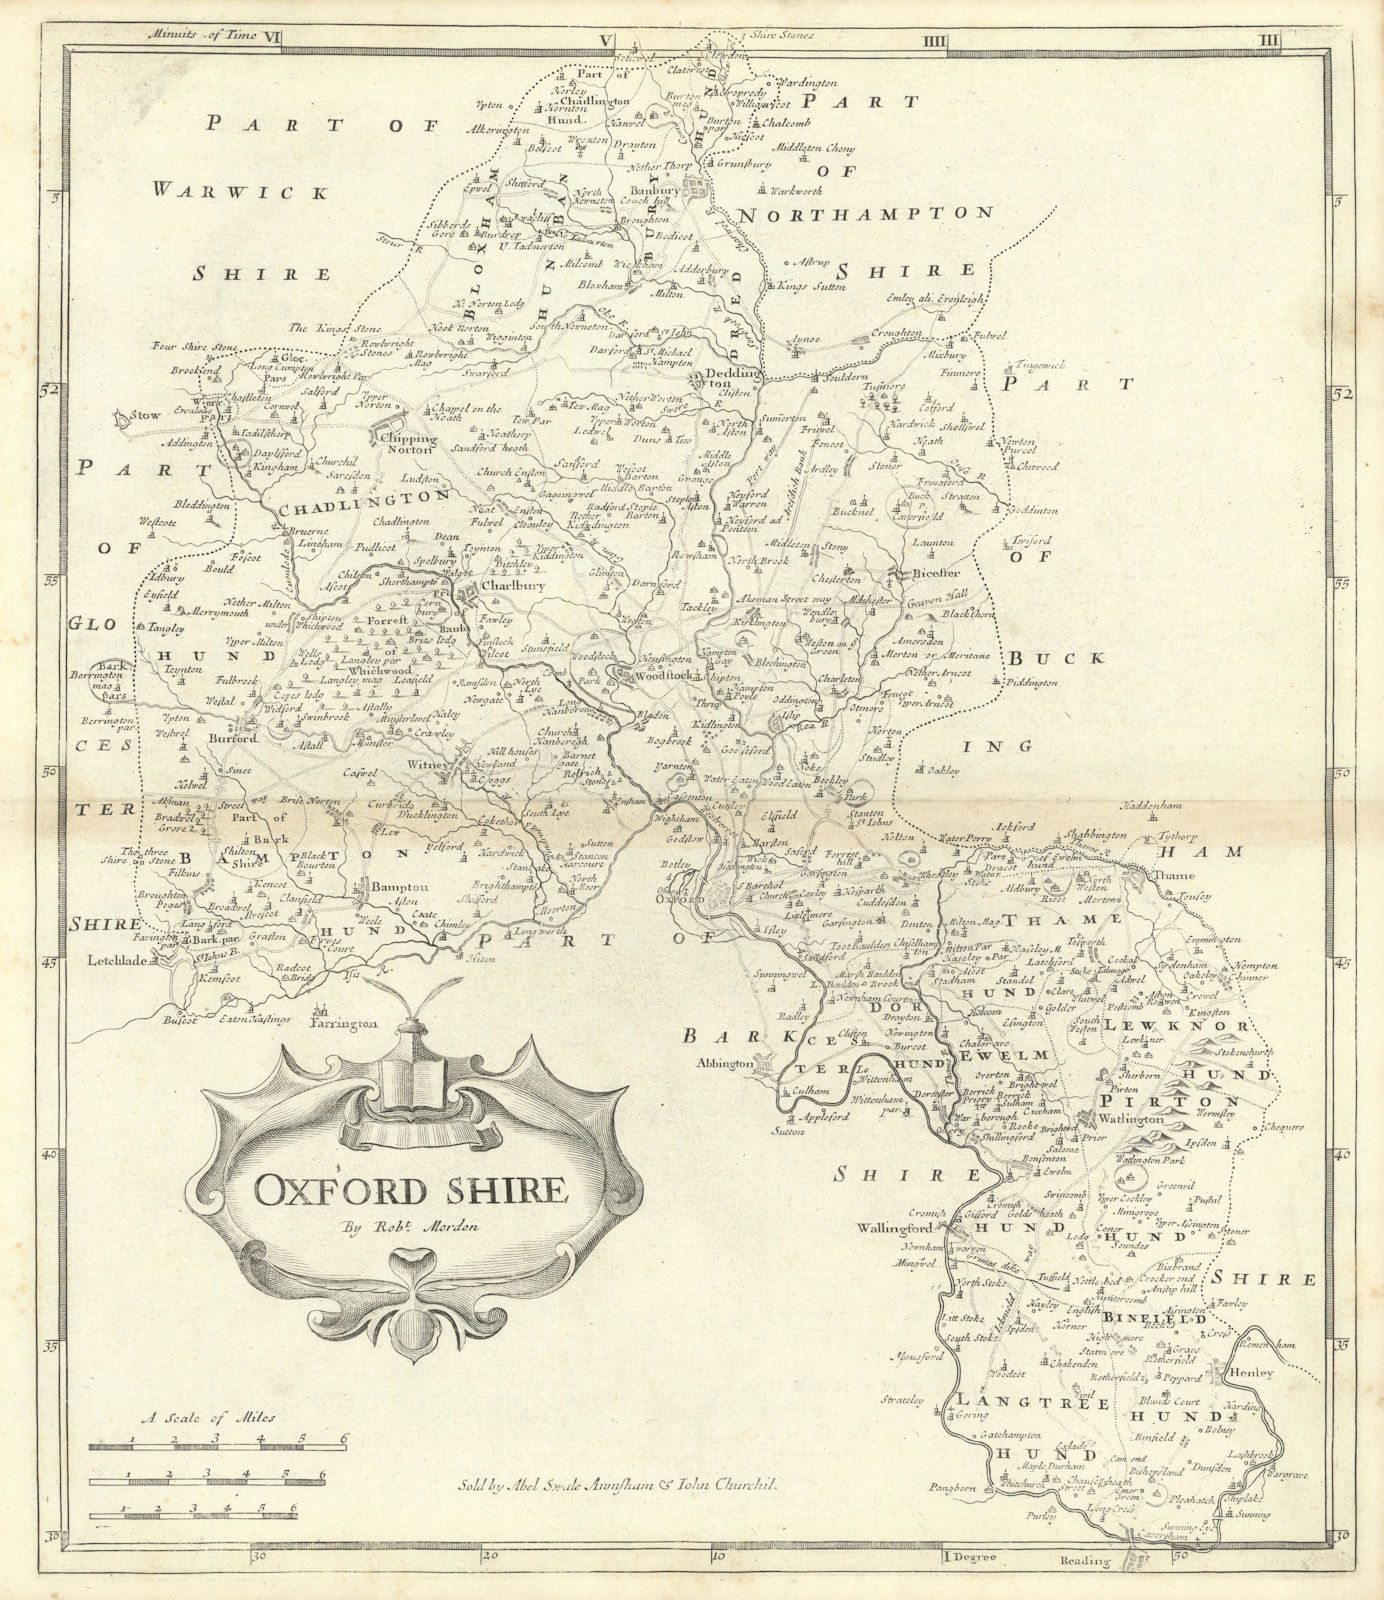 Oxfordshire. 'OXFORD SHIRE' by ROBERT MORDEN from Camden's Britannia 1722 map